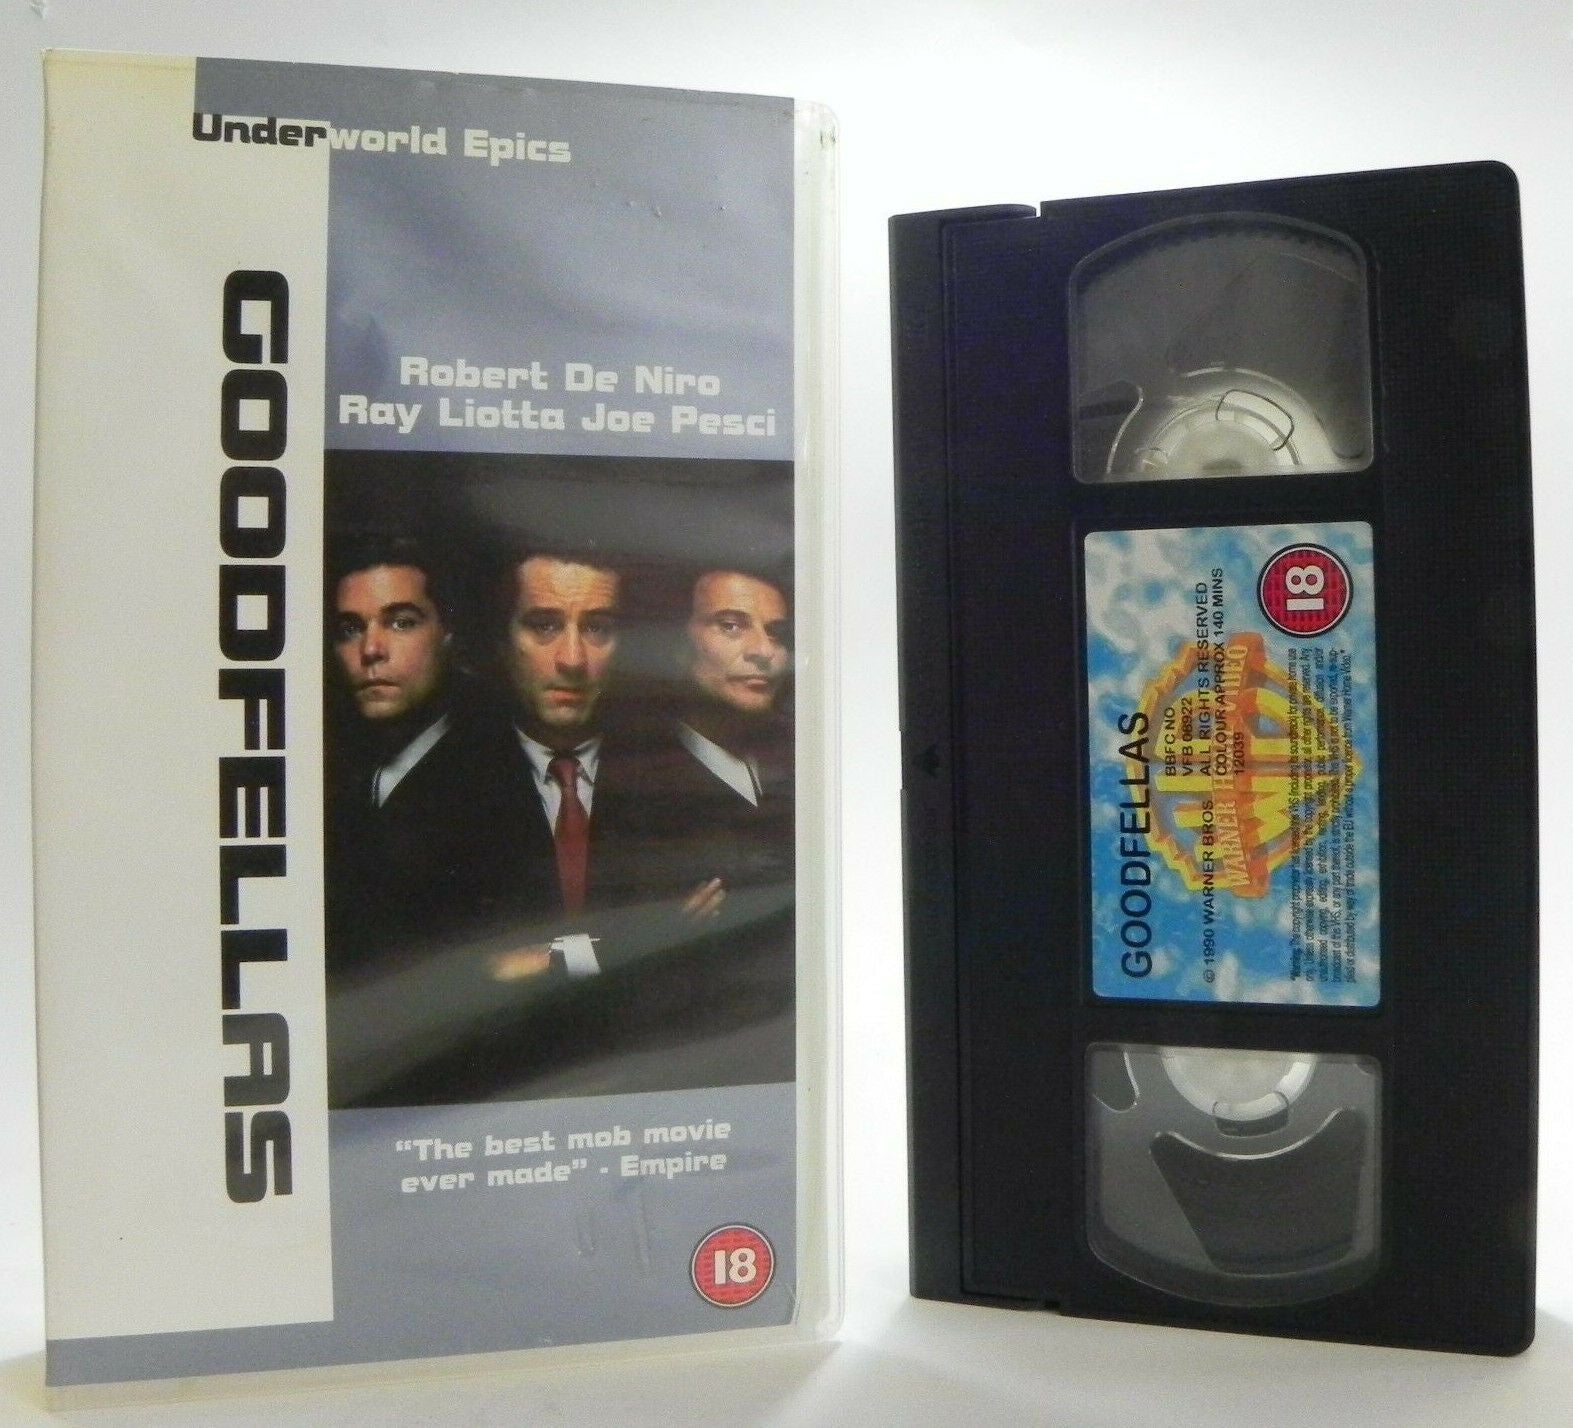 Goodfellas: Underworld Epics - Crime/Drama (1990) - R.De Niro/J.Pesci - Pal VHS-